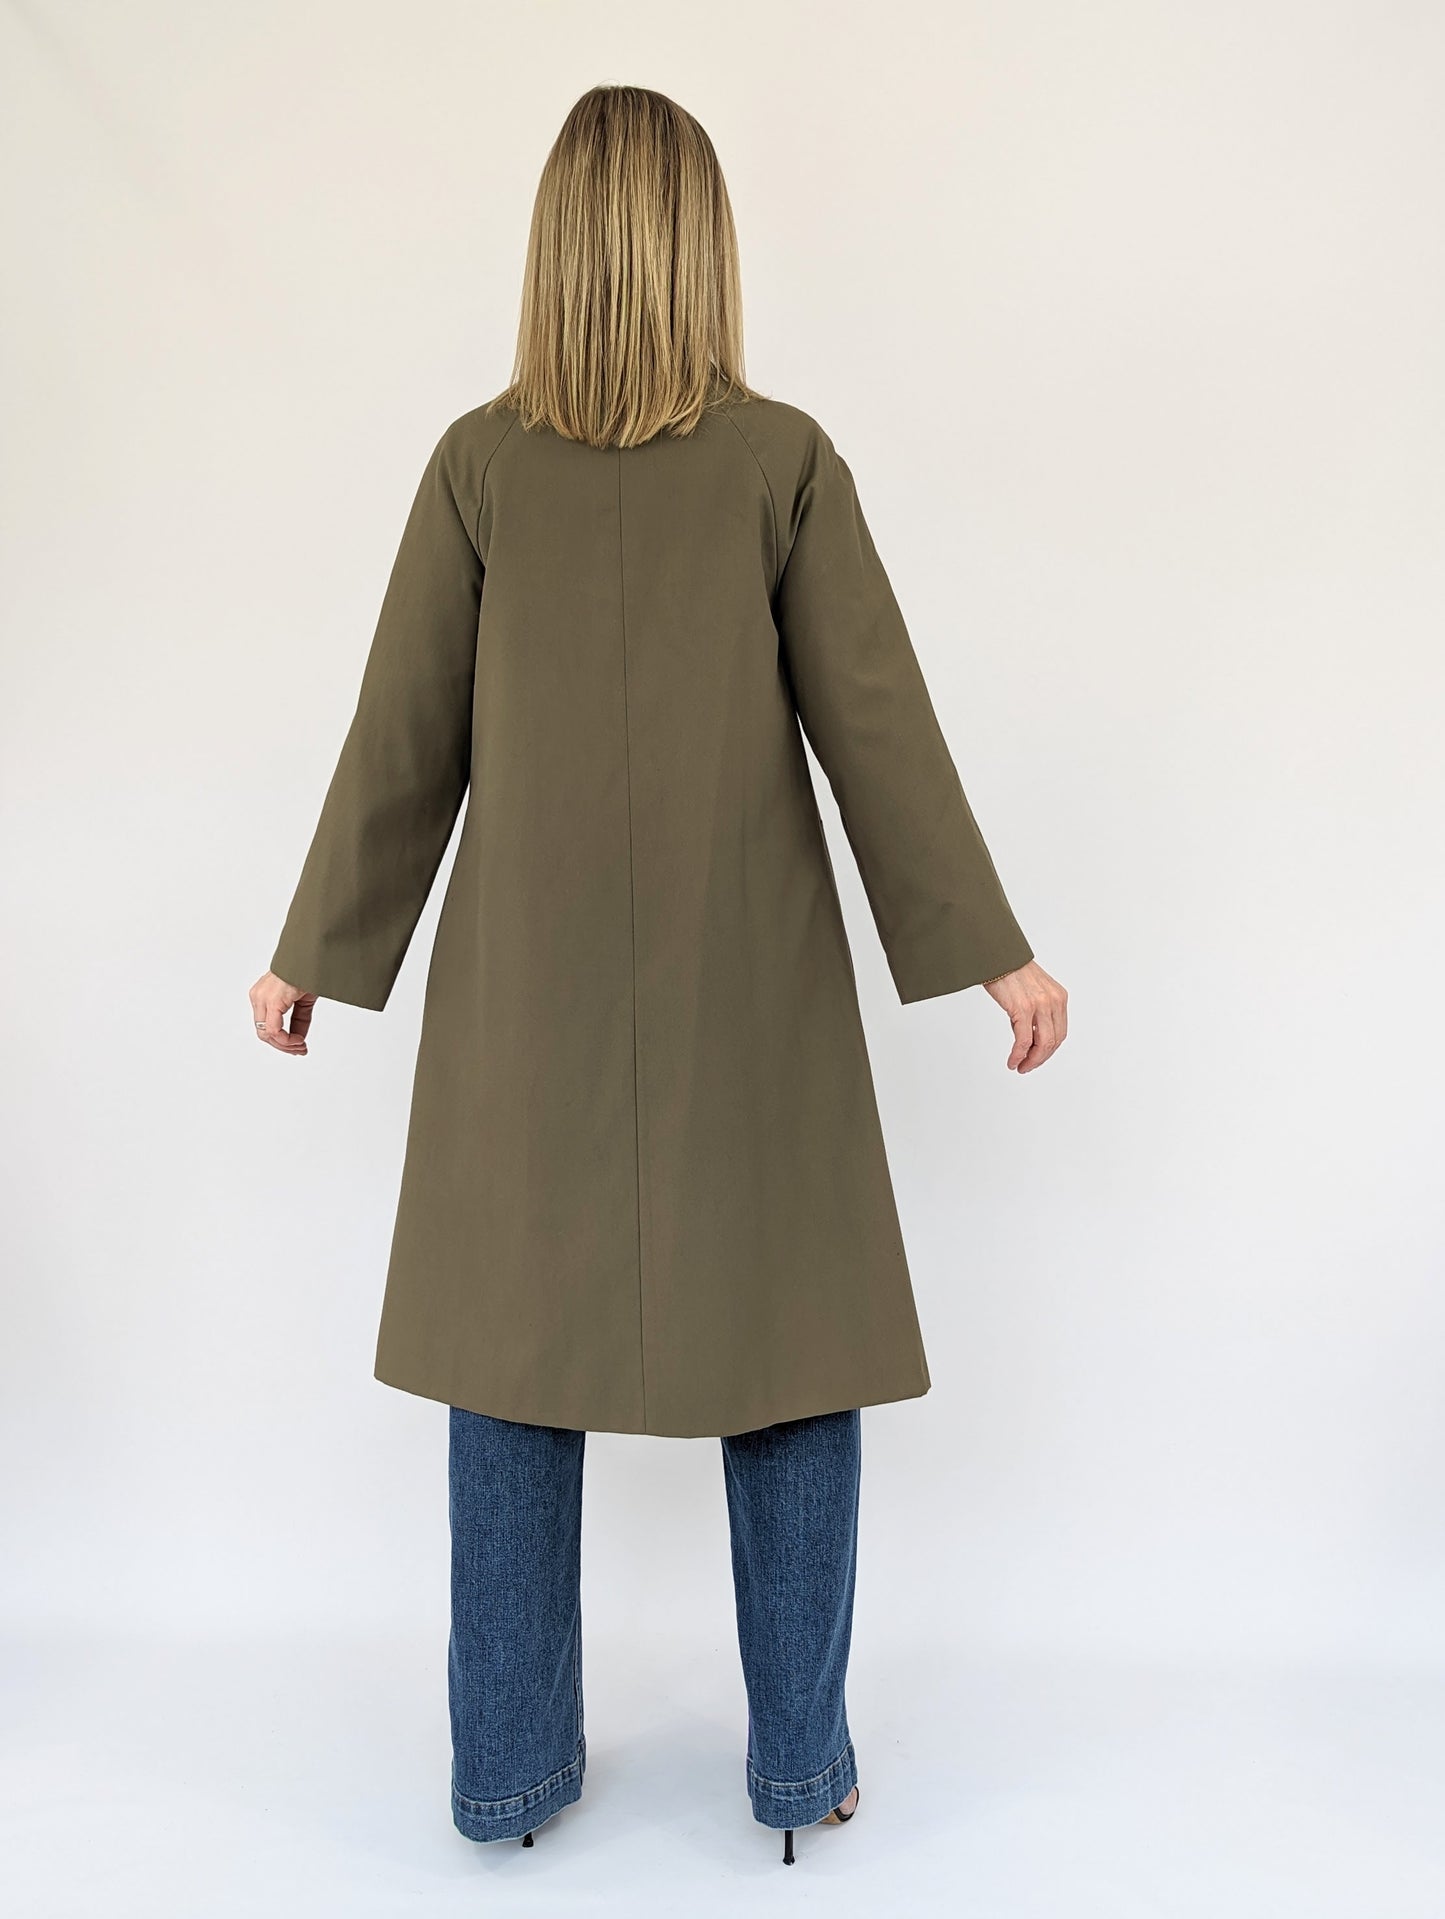 light weight women's vintage trench coat